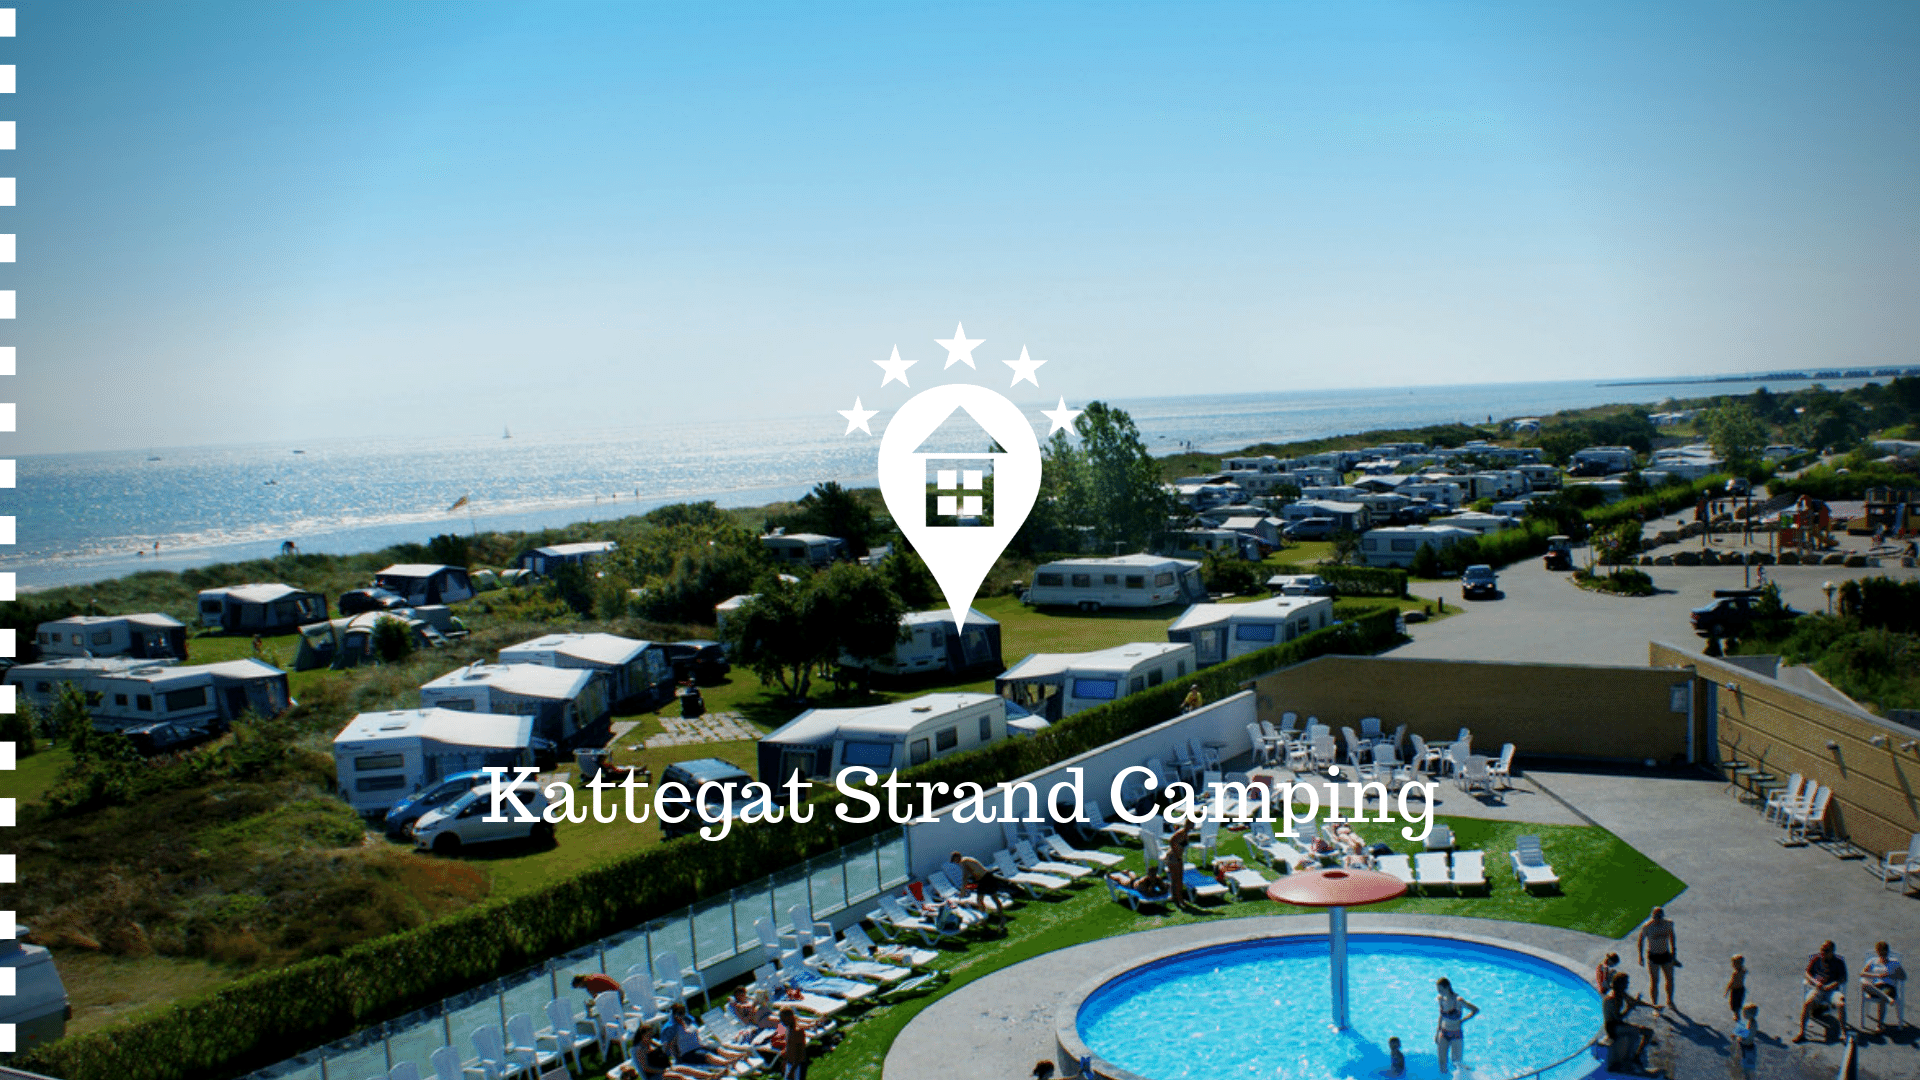 Kattegat Strand Camping